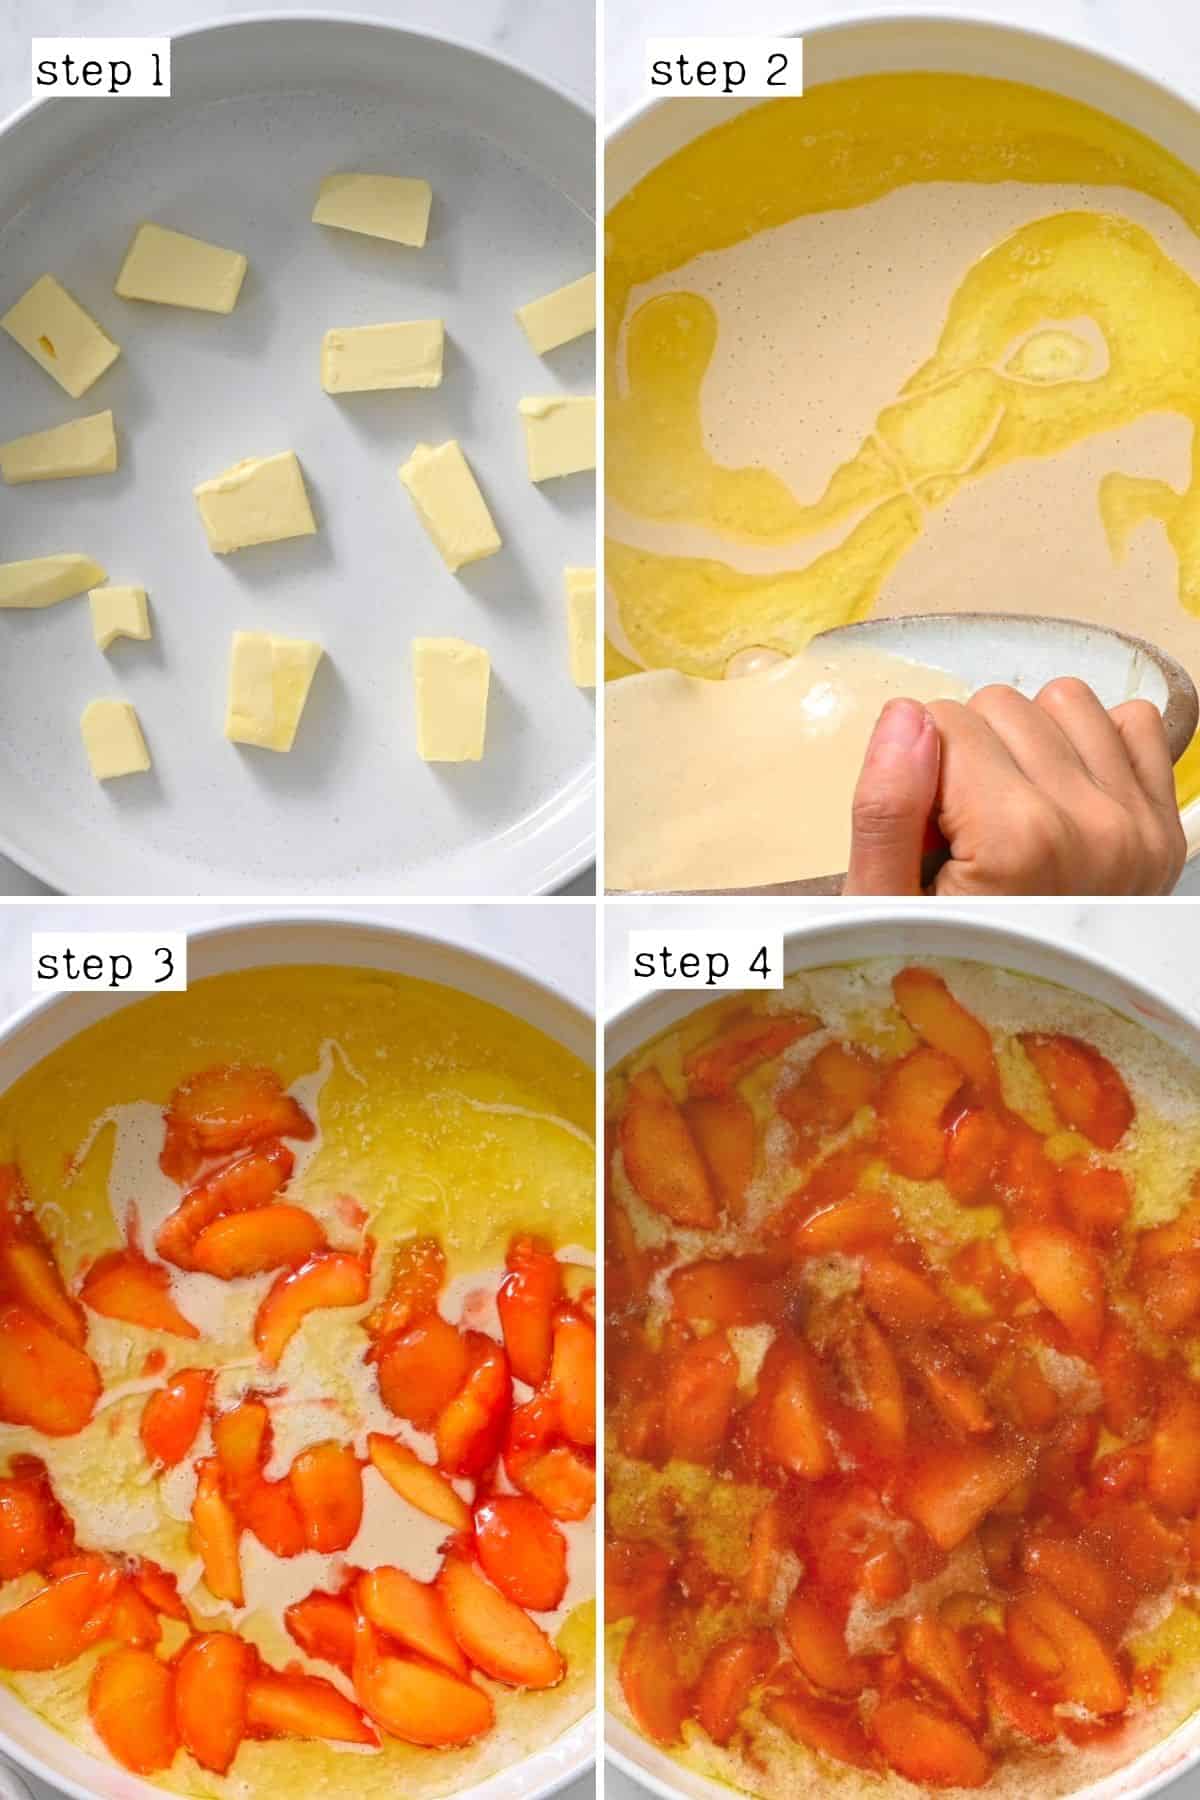 Steps for preparing peach cobbler